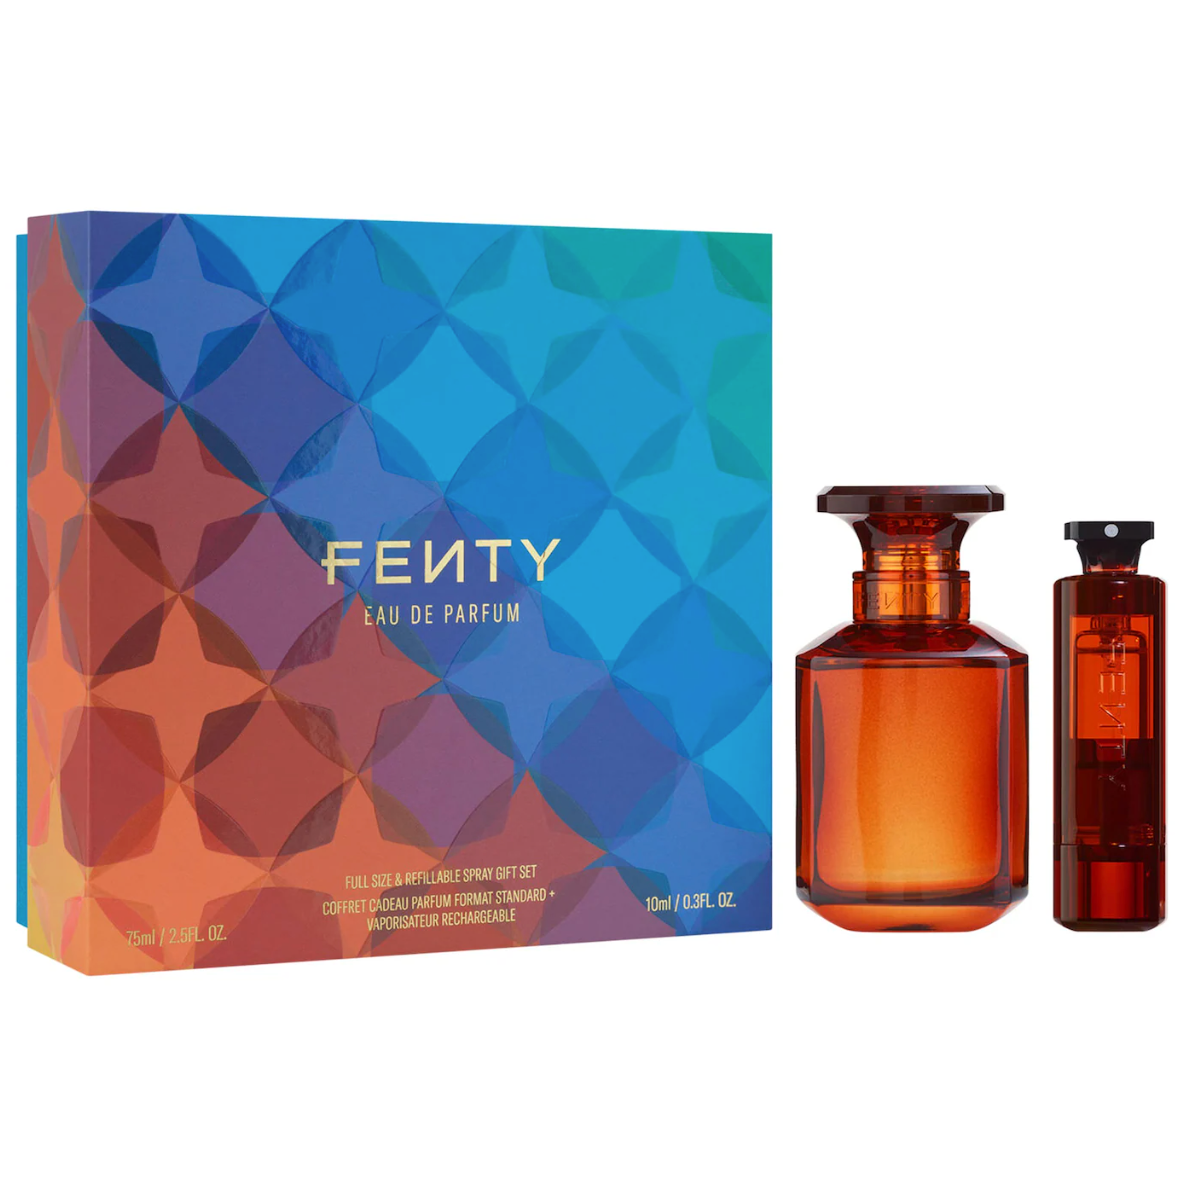 The Best Fresh & Clean Designer Fragrances For Men (Dior, Burberry